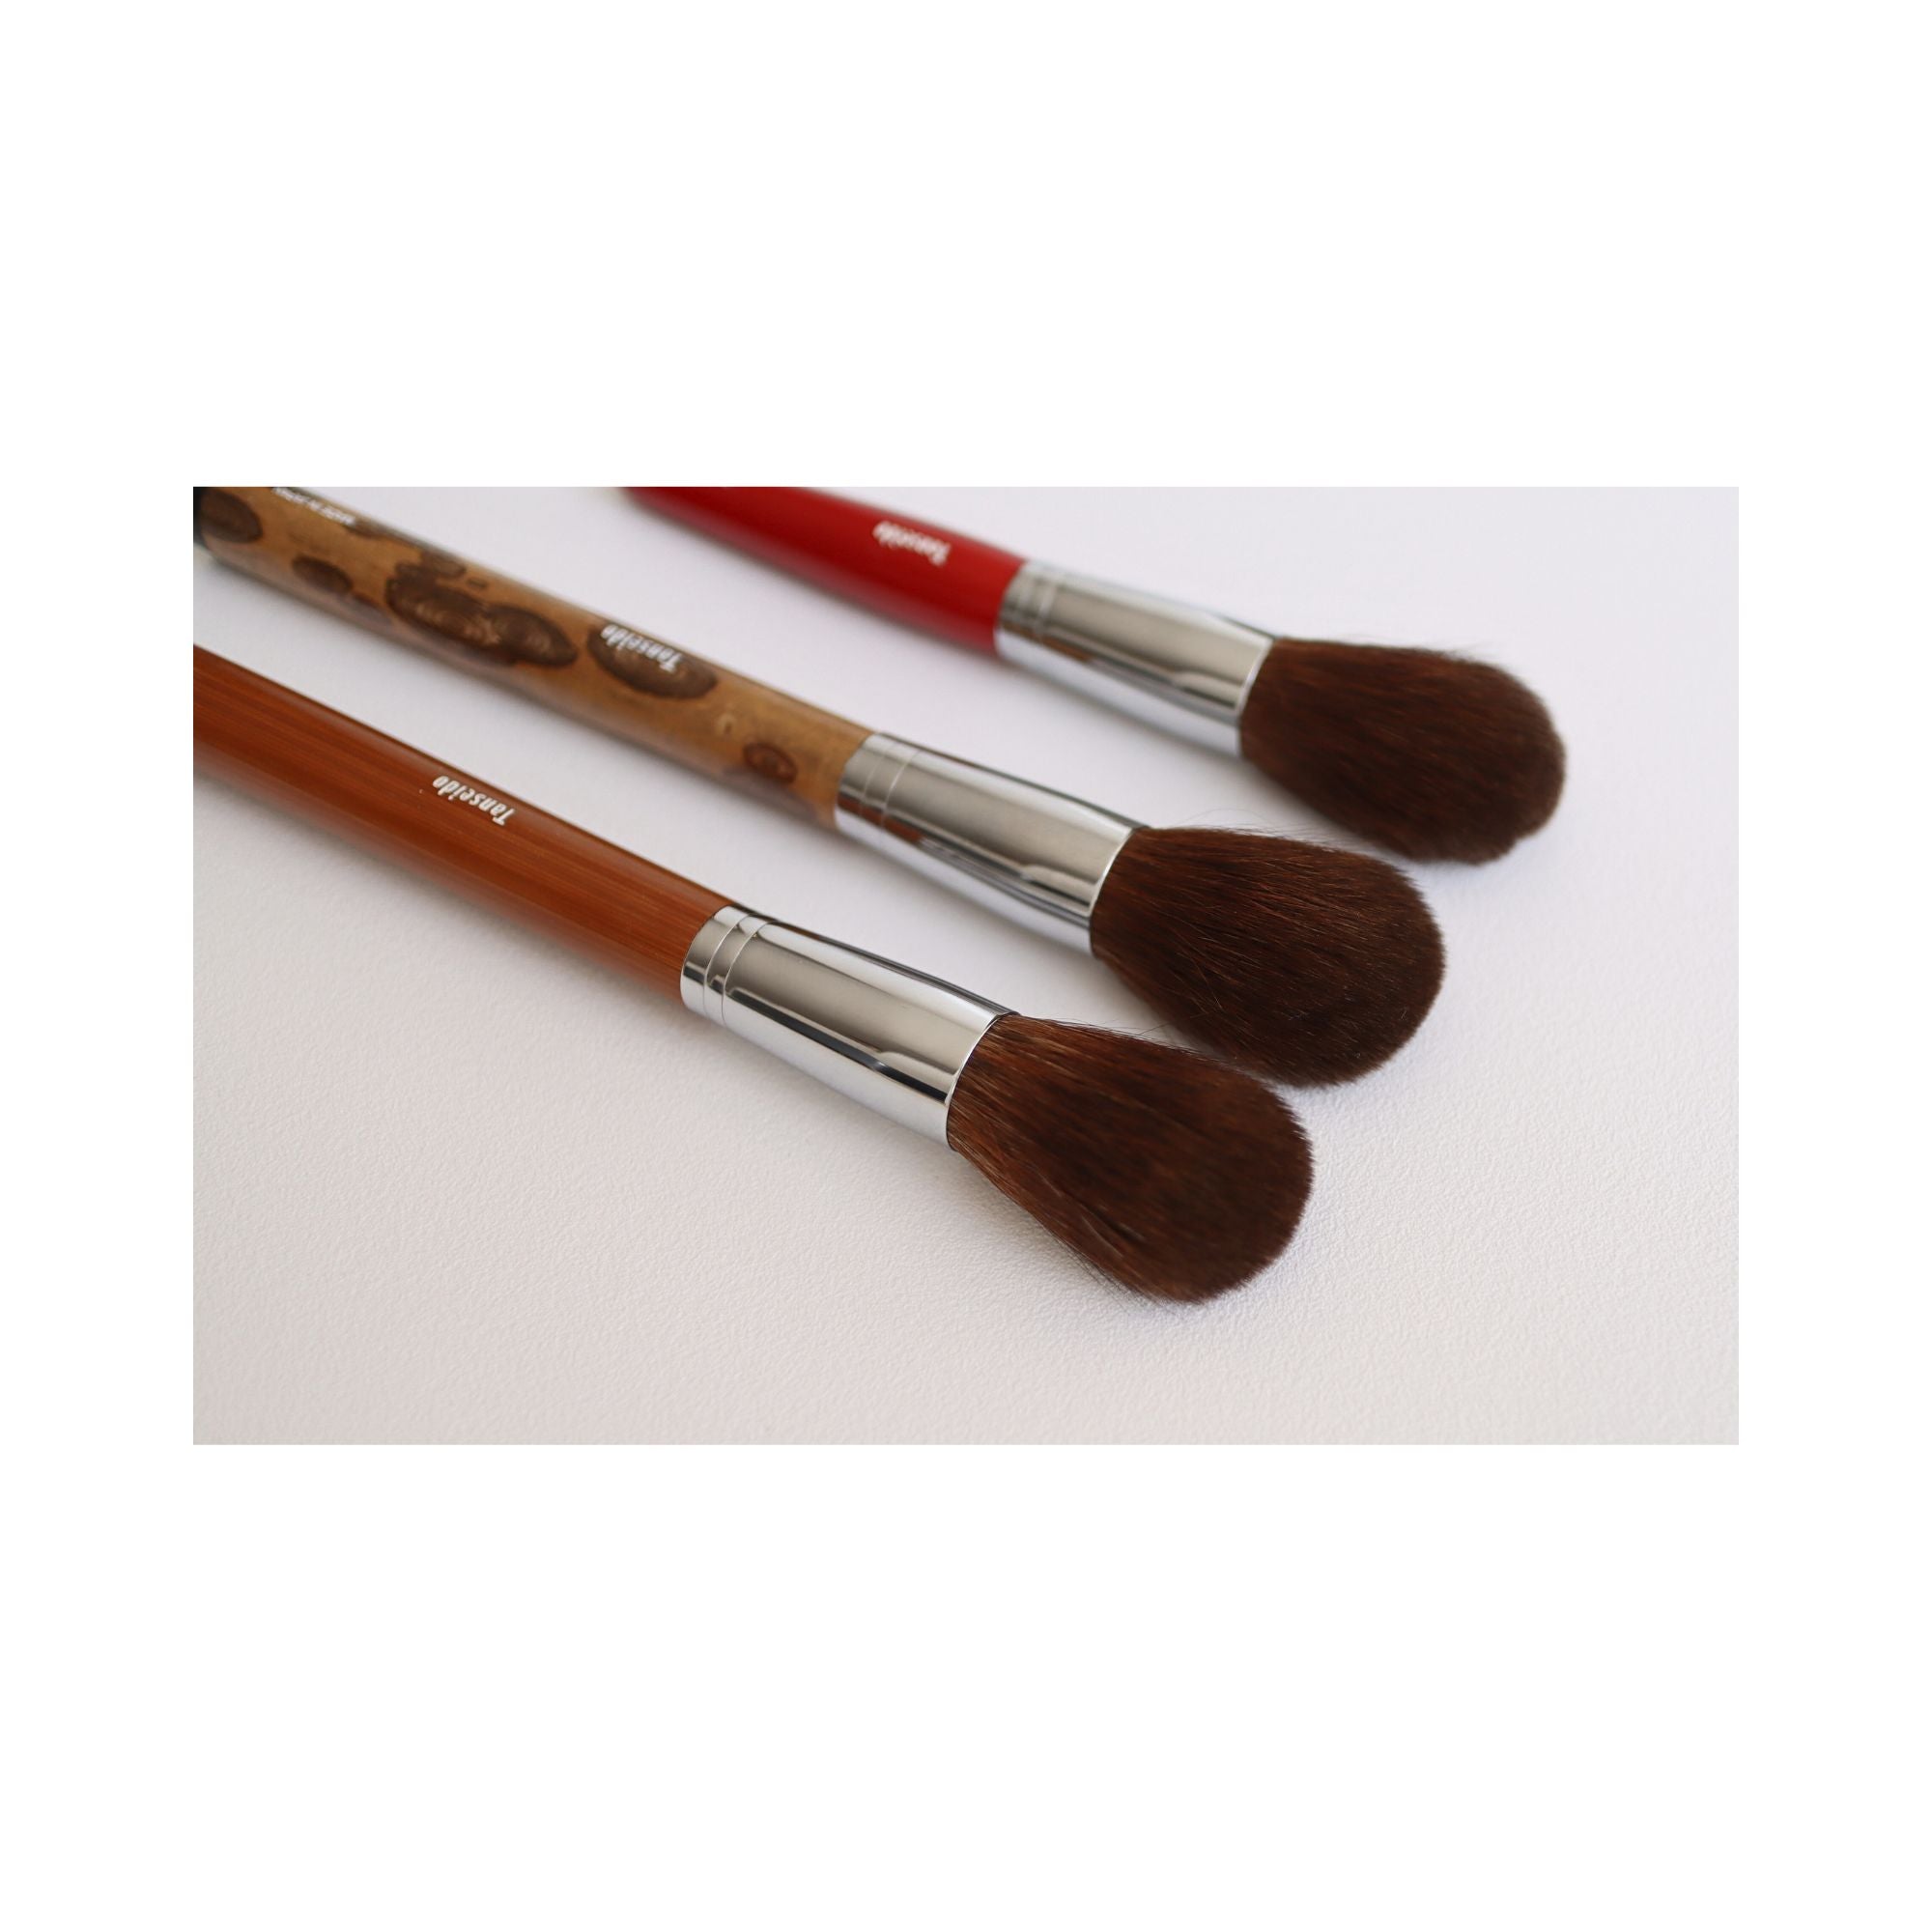 Tanseido Large Cheek Brush, Take 竹 'Bamboo' Series (AC28TAKE) - Fude Beauty, Japanese Makeup Brushes